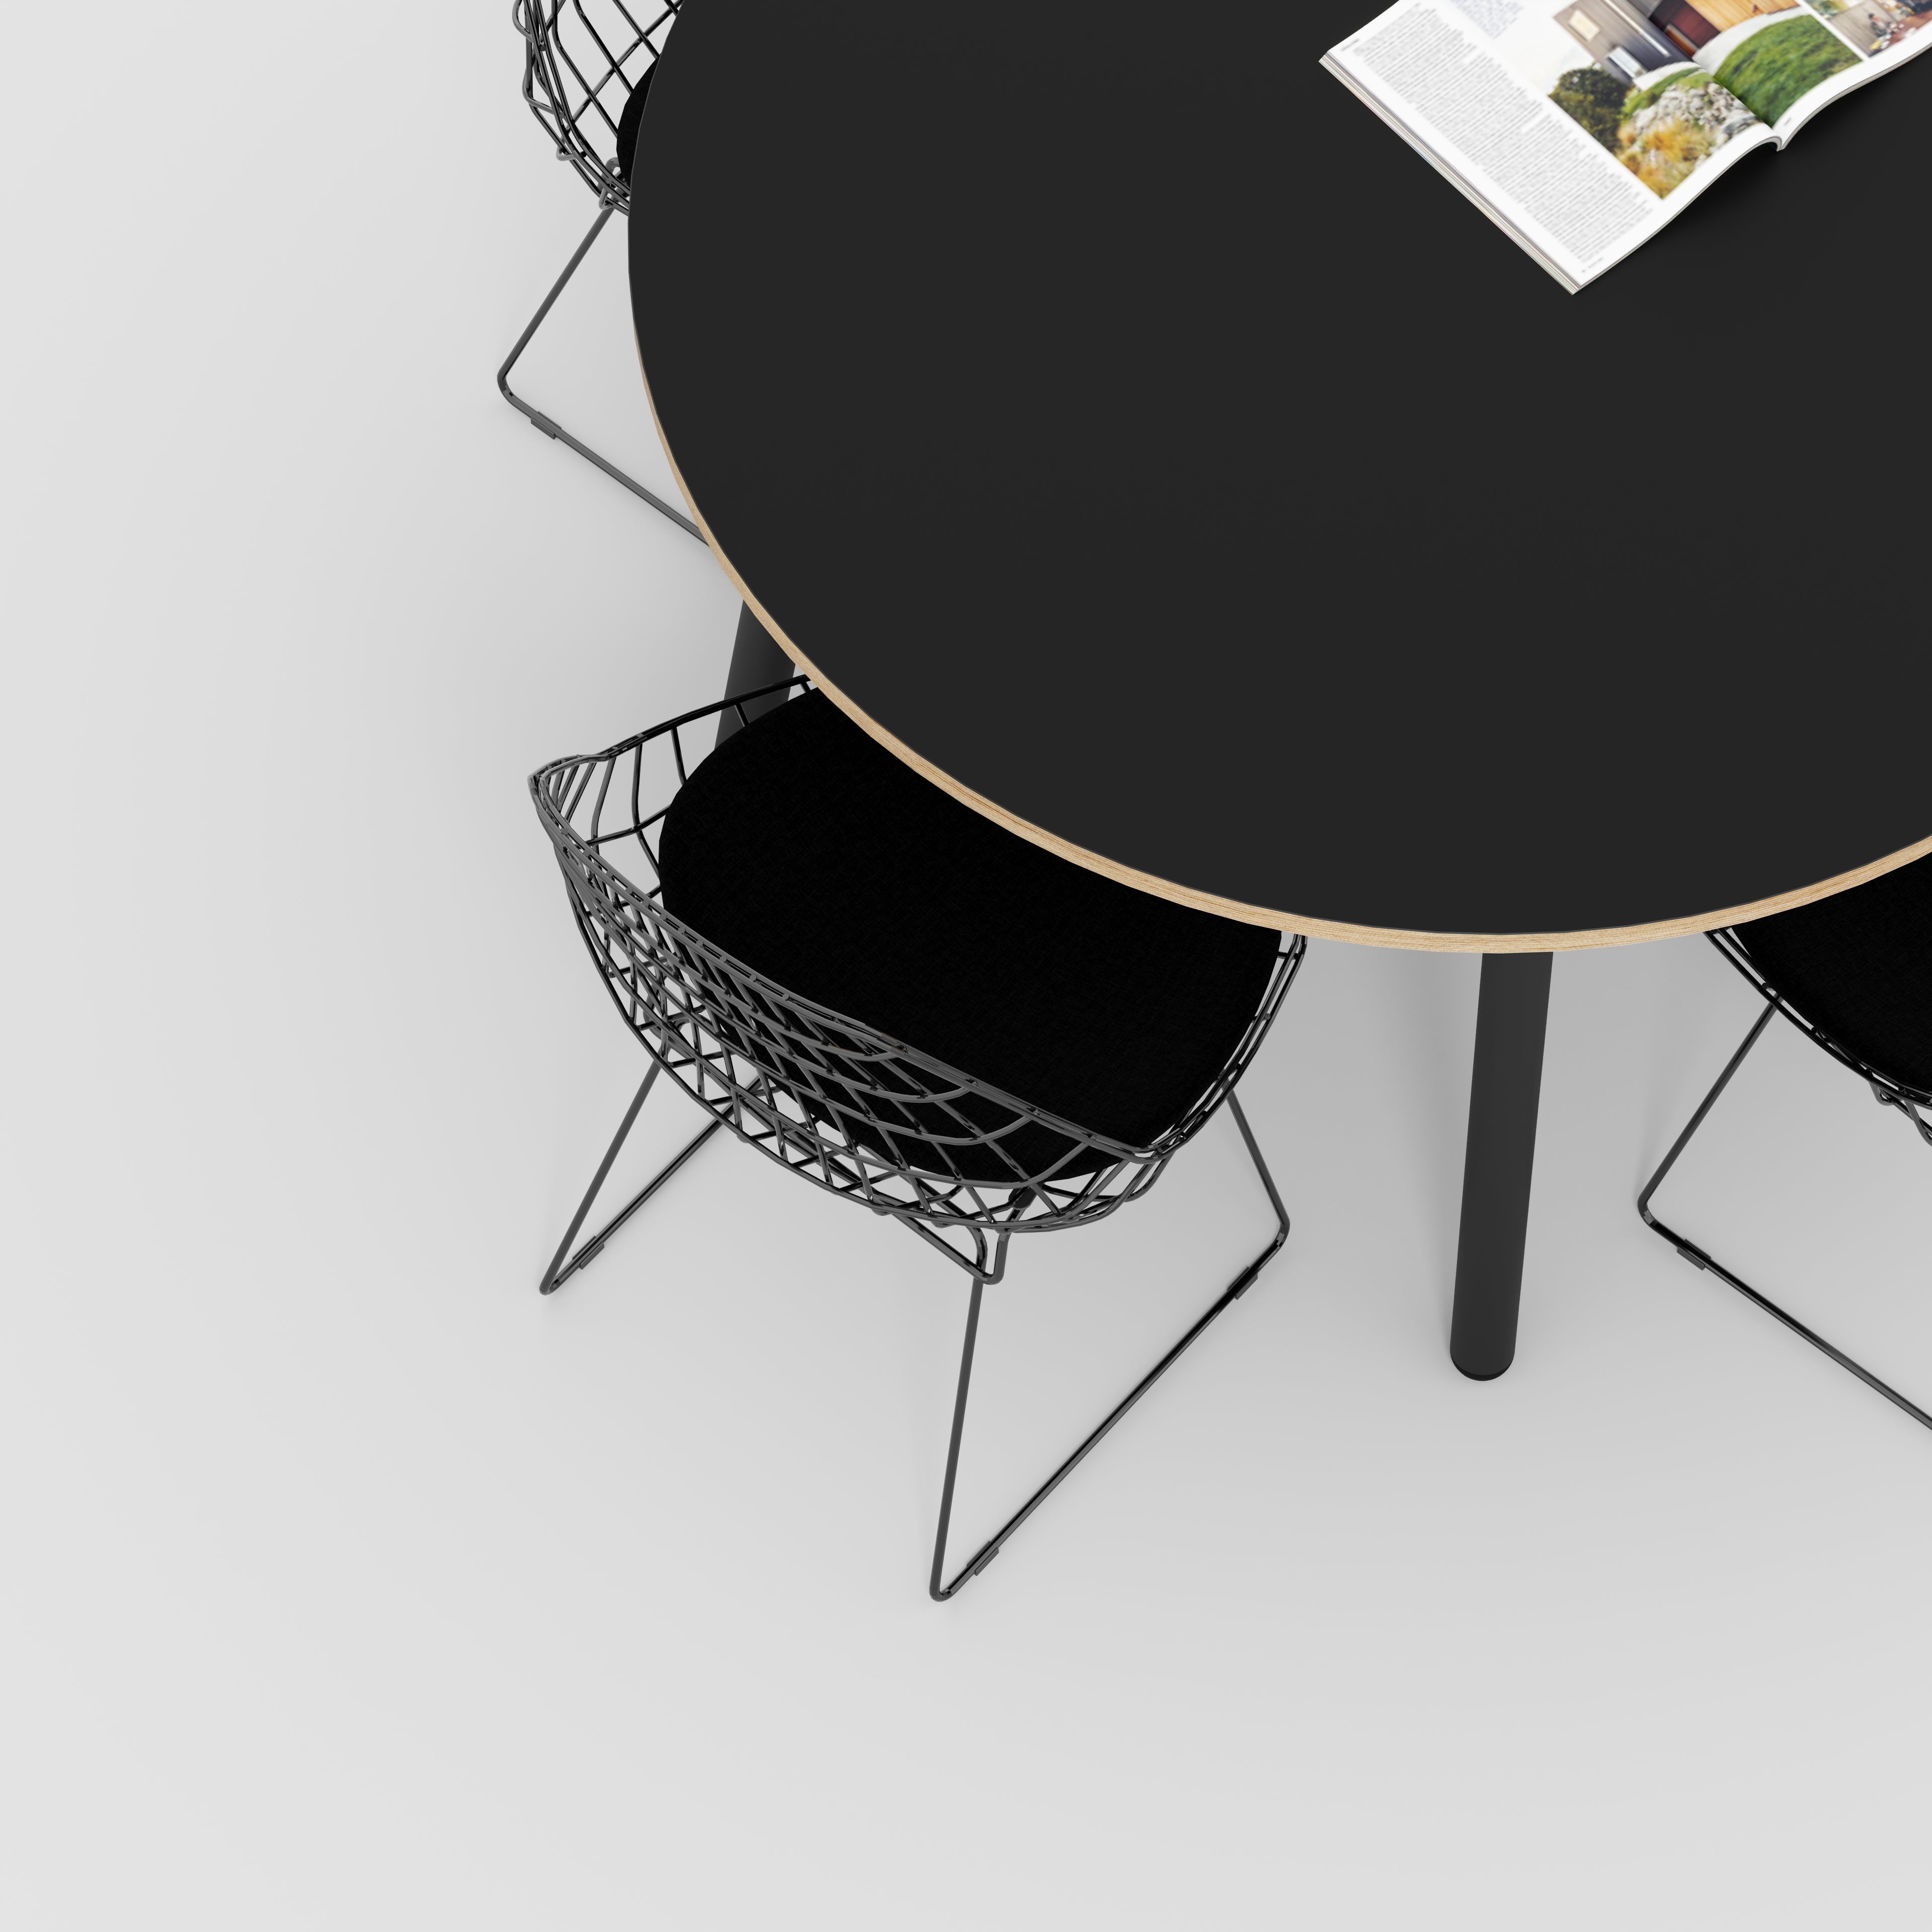 Round Table with Black Round Single Pin Legs - Formica Diamond Black - 1200(dia) x 735(h)